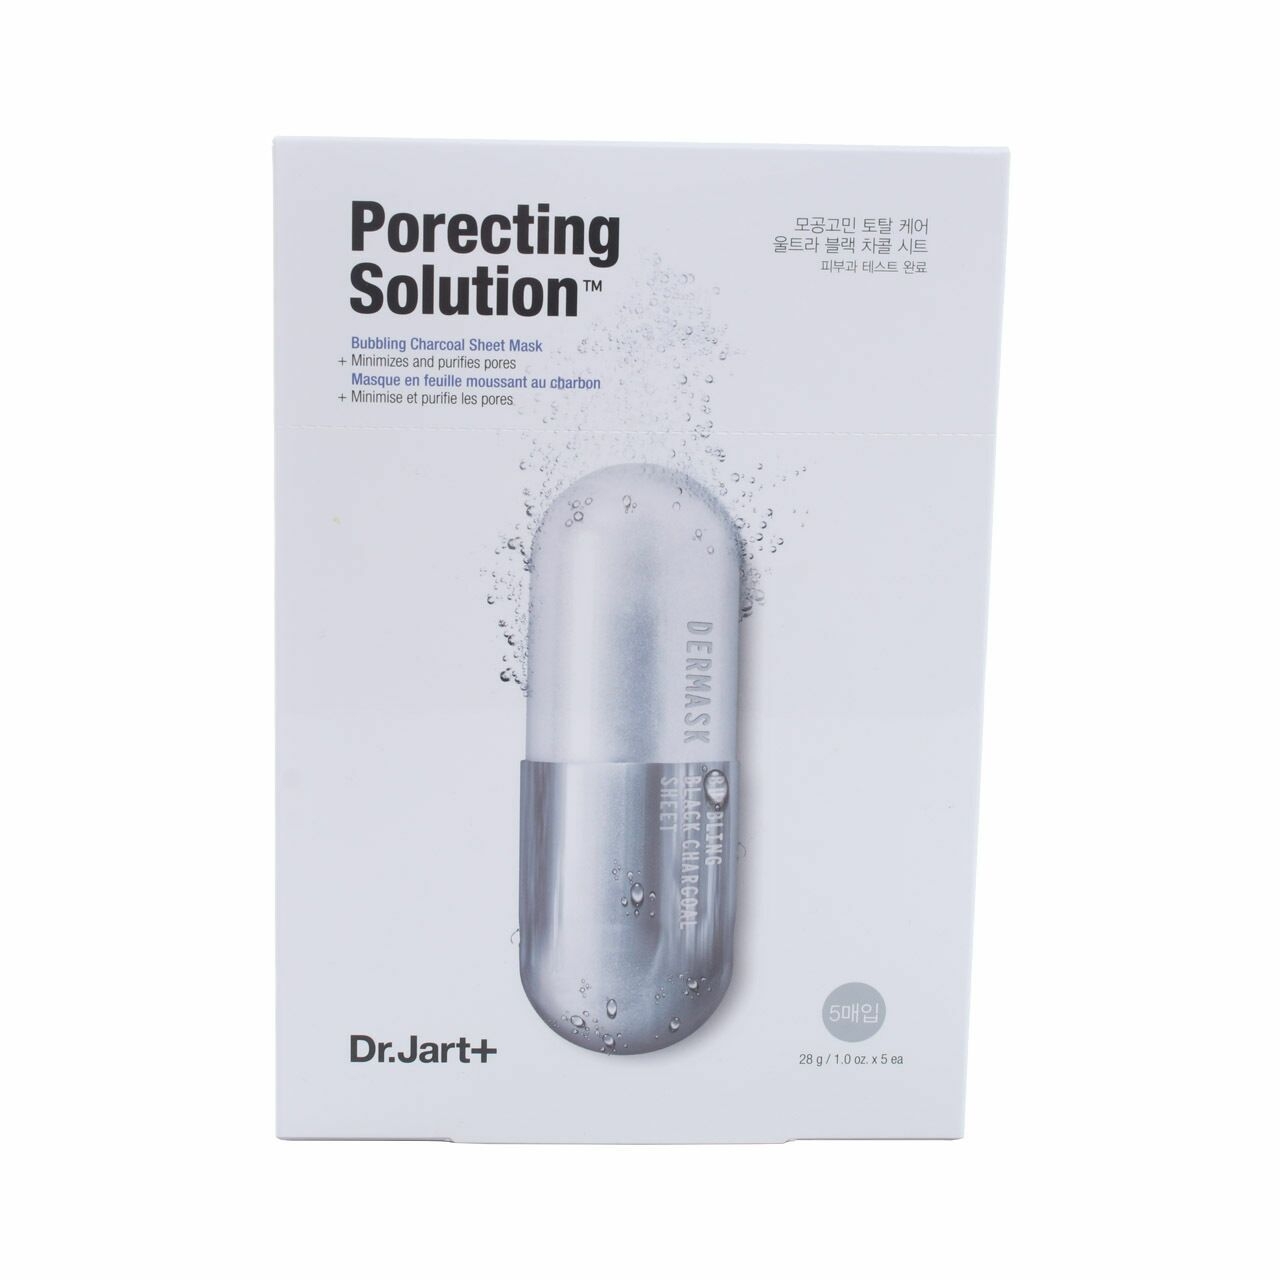 Dr.Jart+ Porecting Solution Bubbling Charcoal Sheet Mask x 5EA